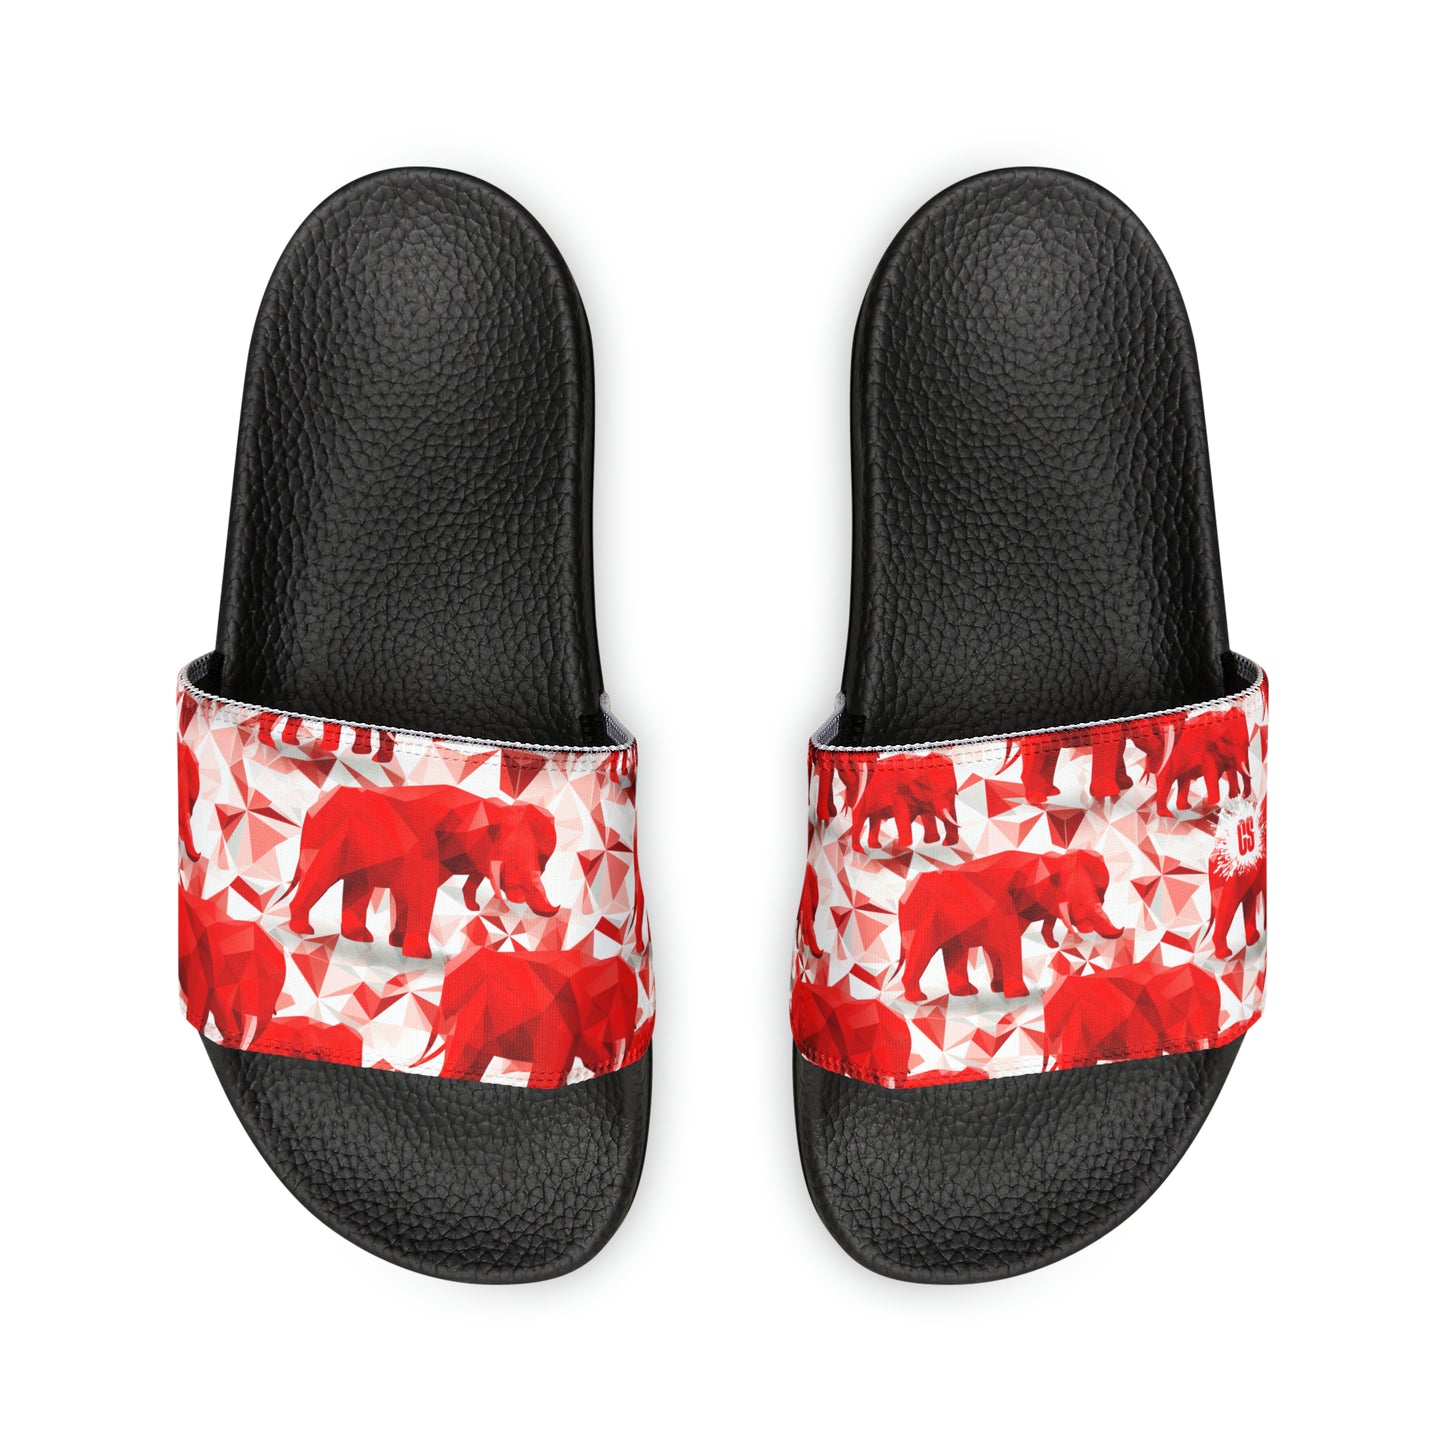 Elephants & Pyramids Women's PU Slide Sandals